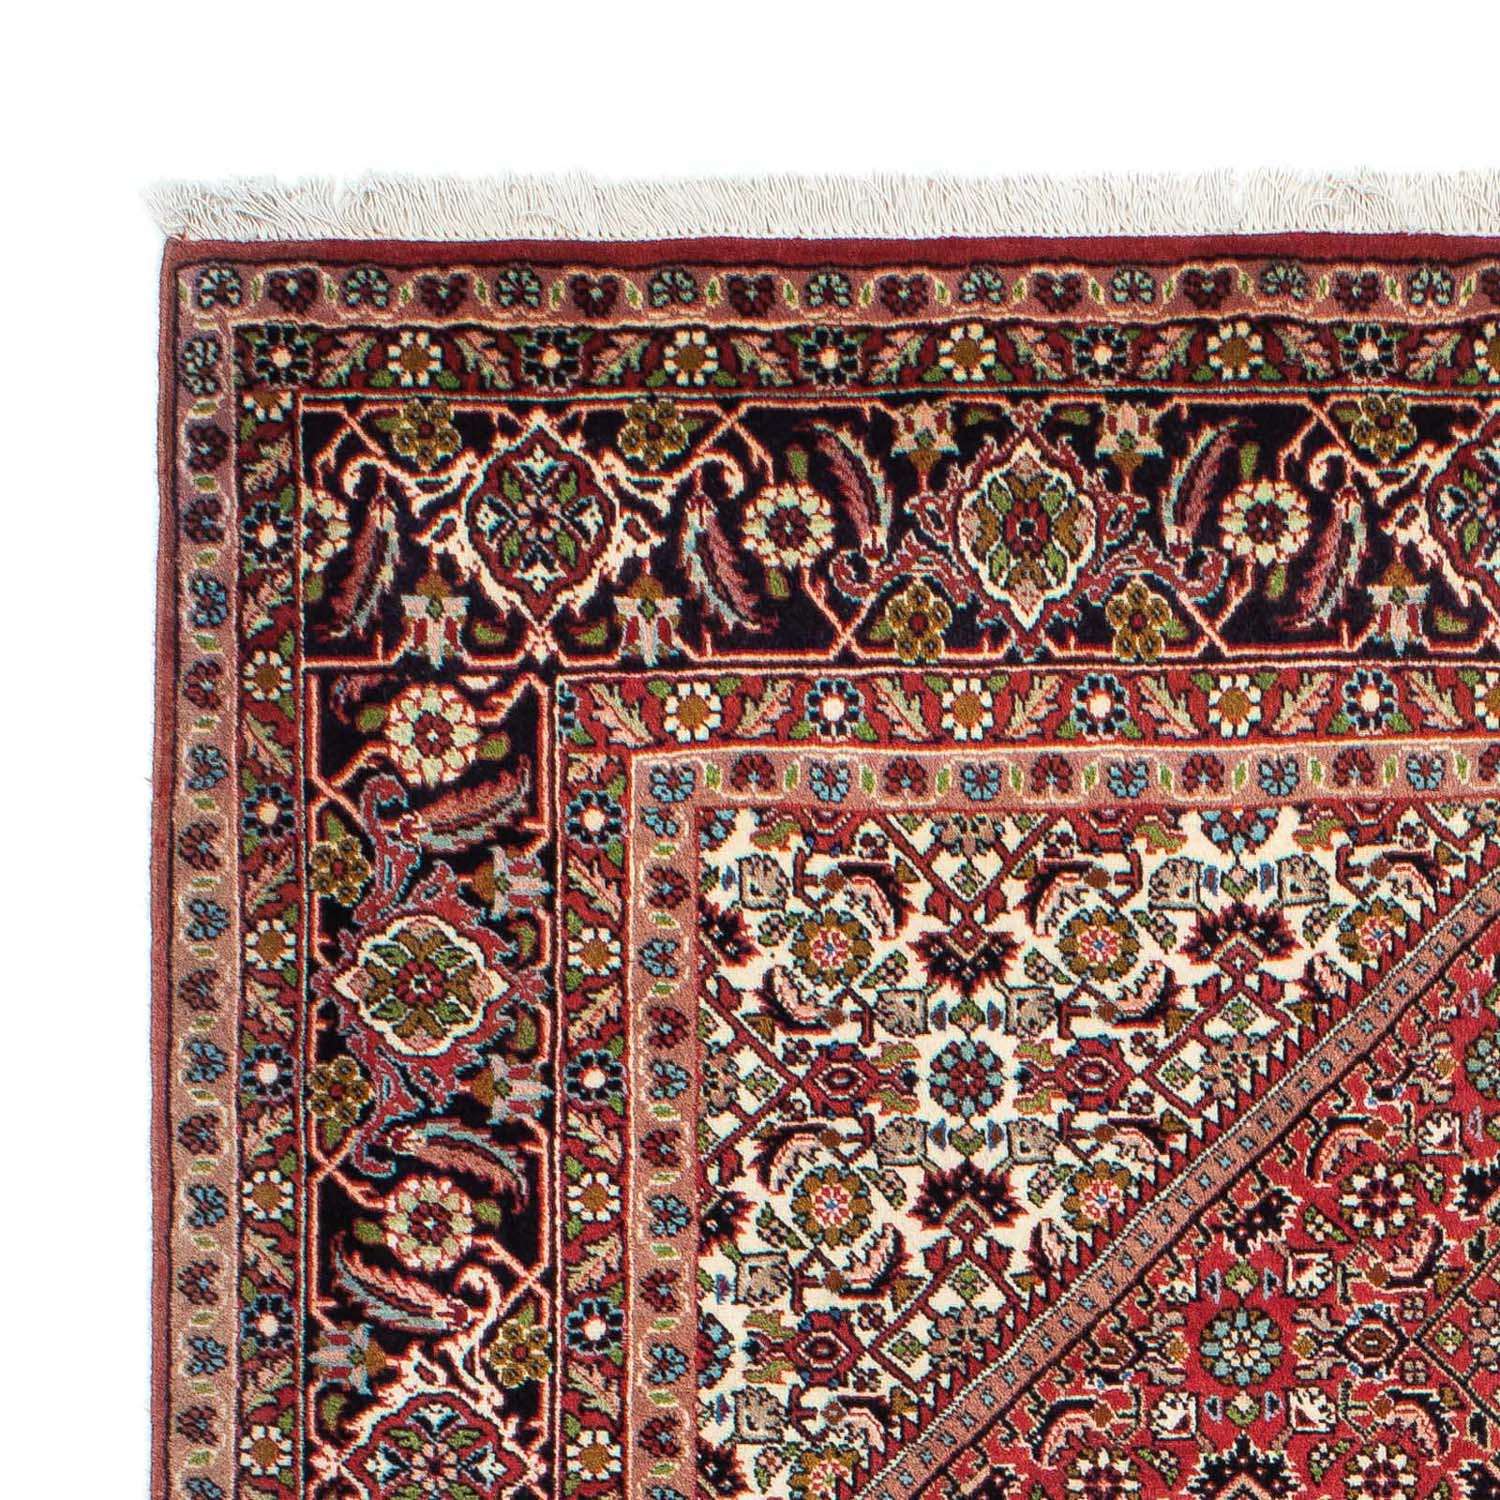 Persisk teppe - Bijar - 224 x 141 cm - lys rød